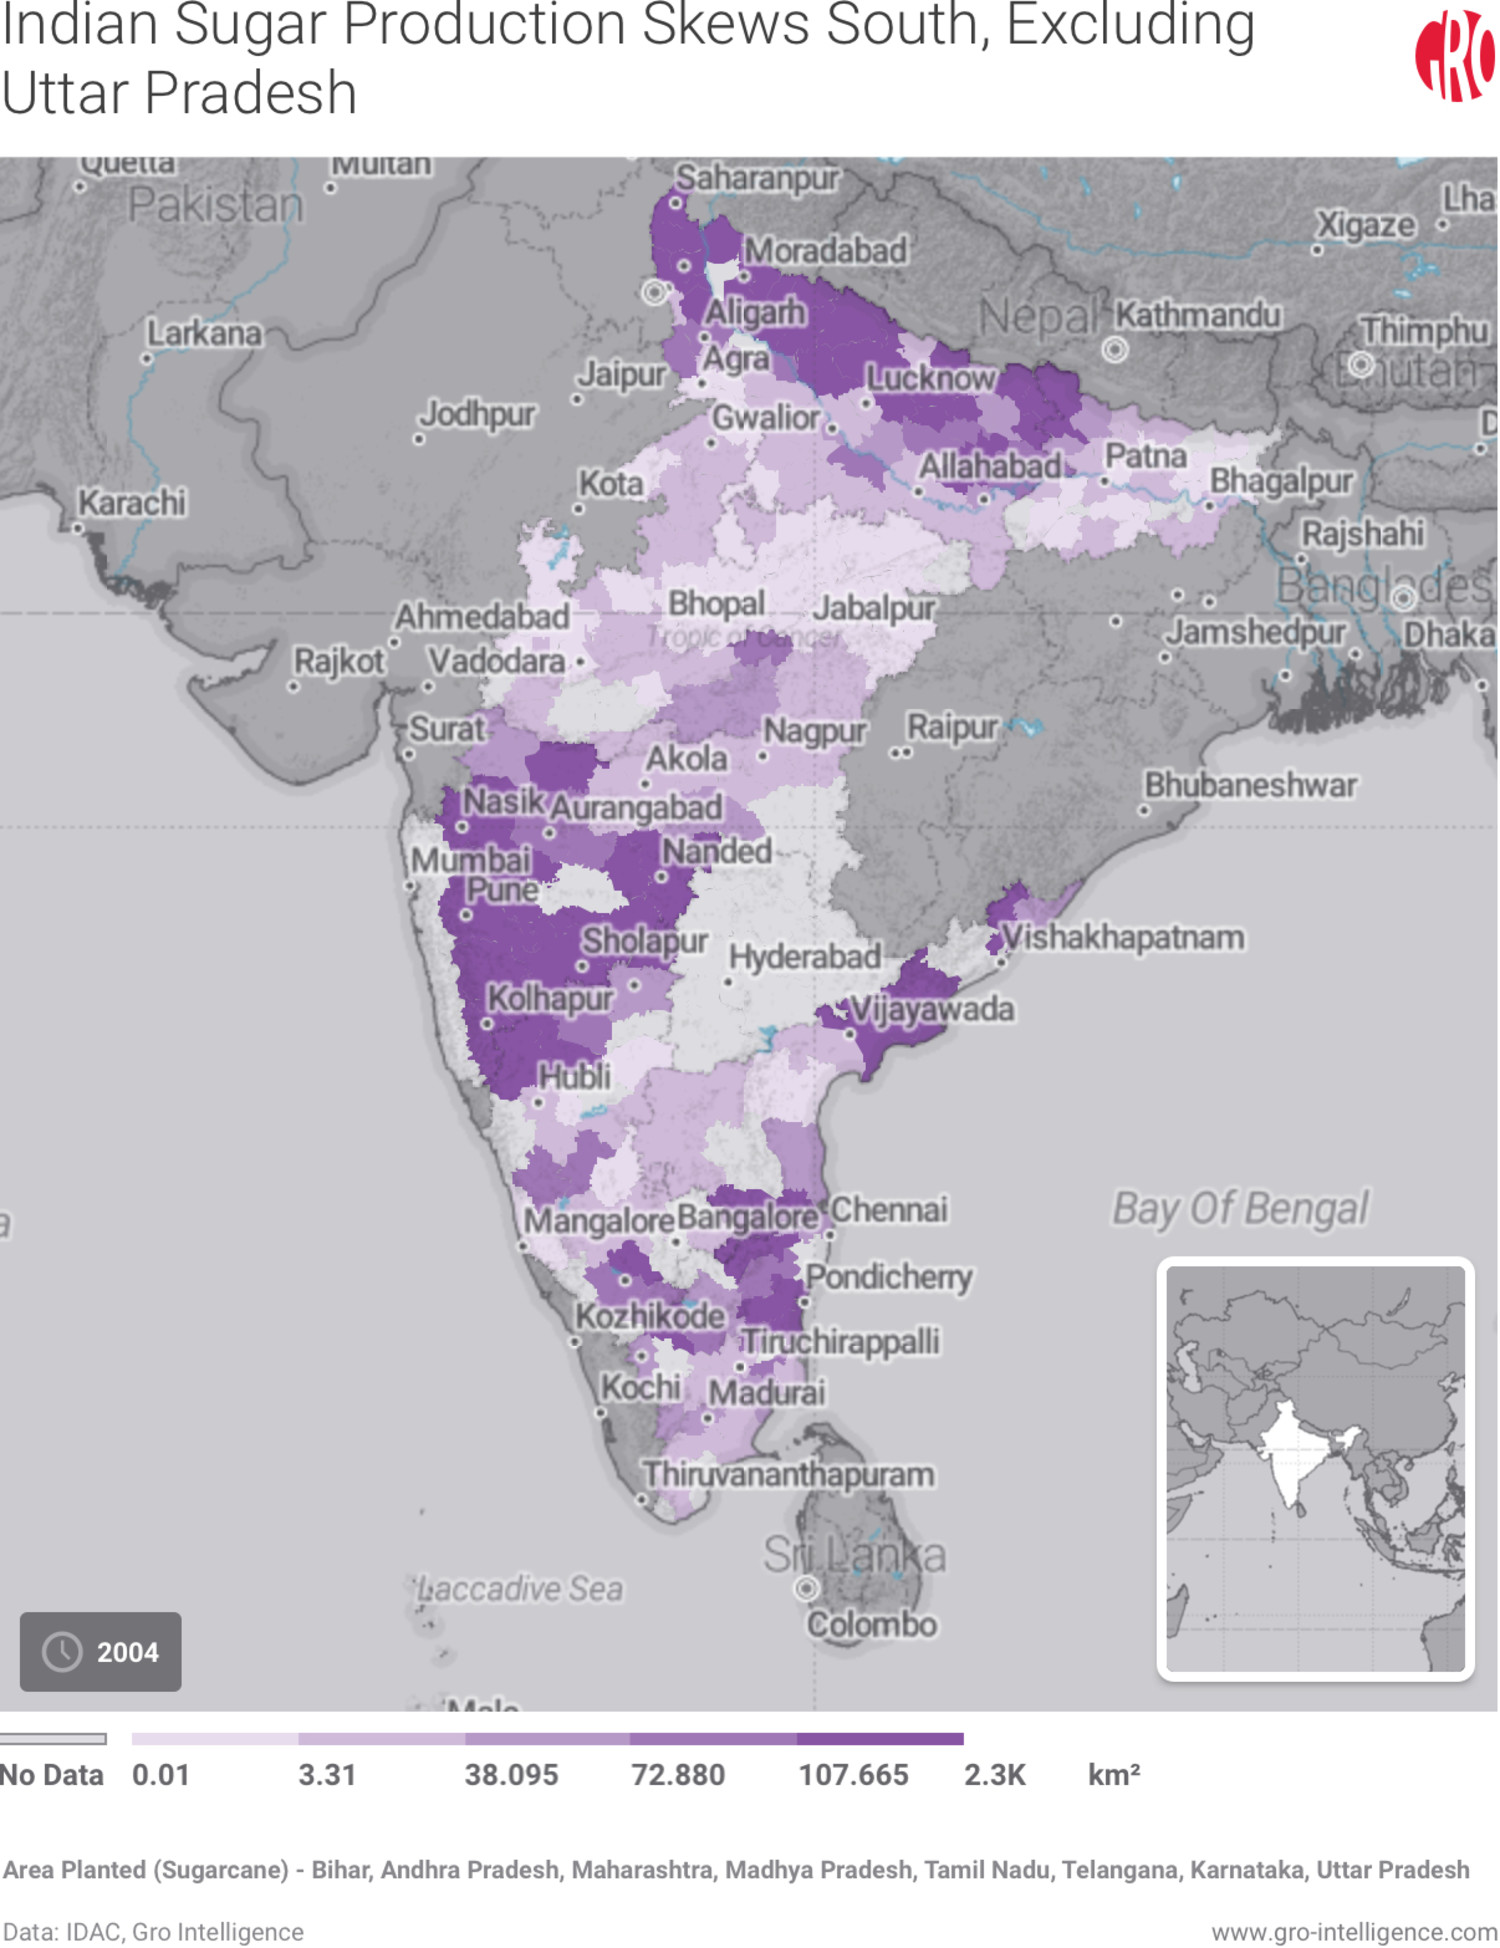 IIndian Sugar Production Skews South, Excluding Uttar Pradesh